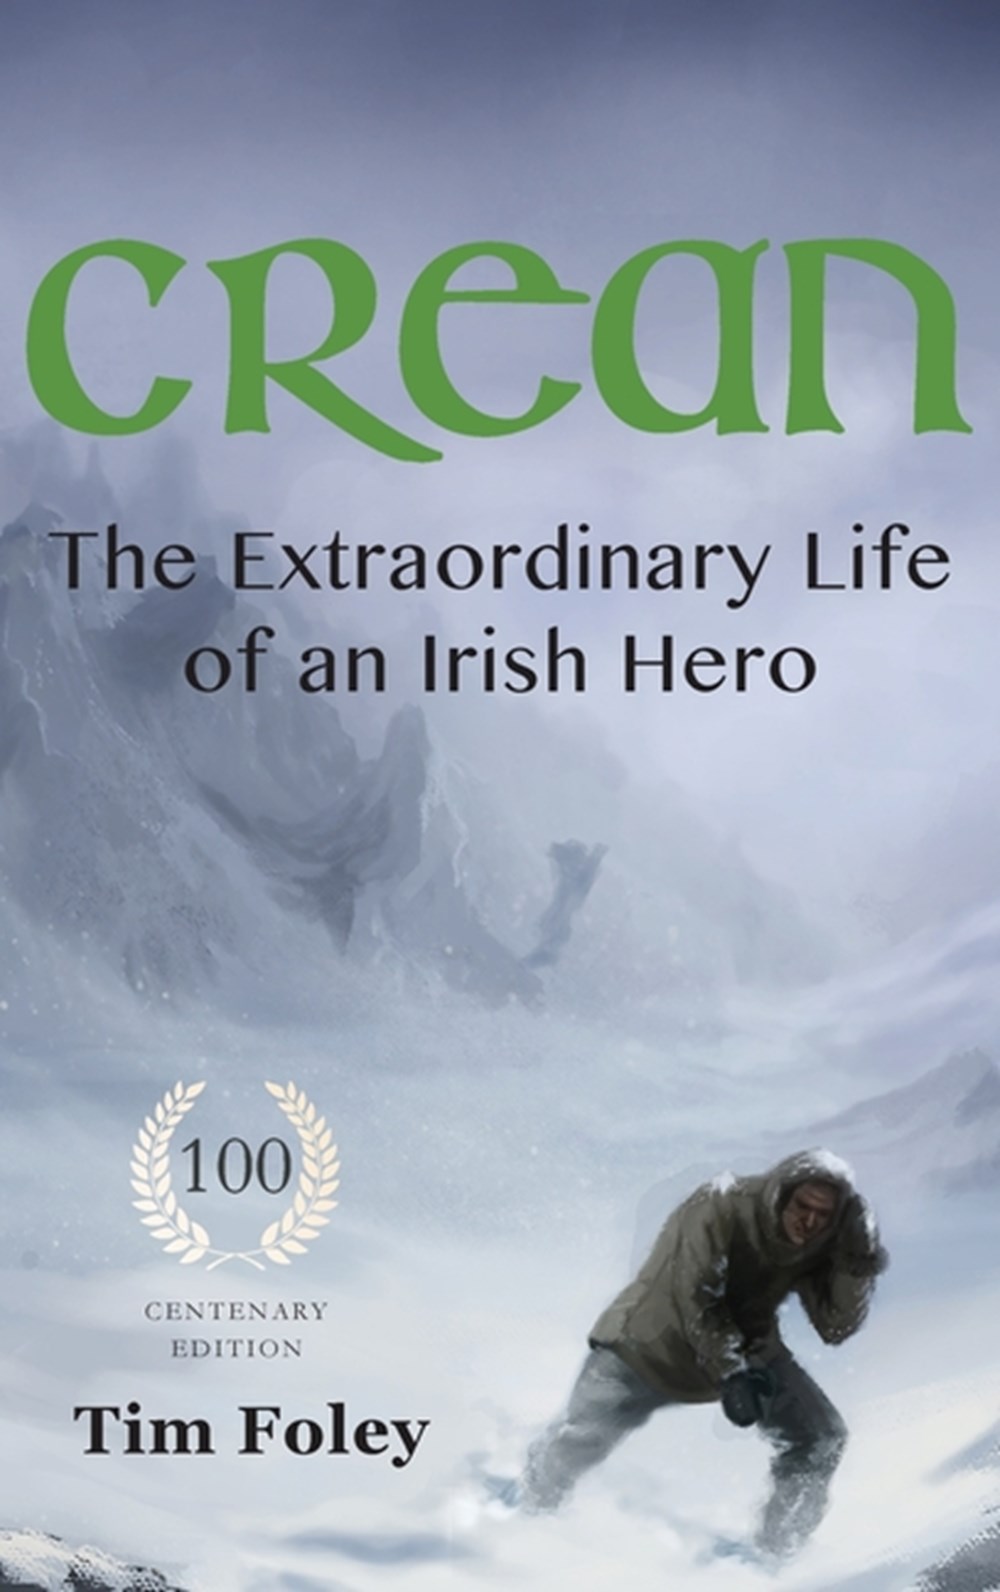 Crean - The Extraordinary Life of an Irish Hero (Third Centenary Version Hardback)